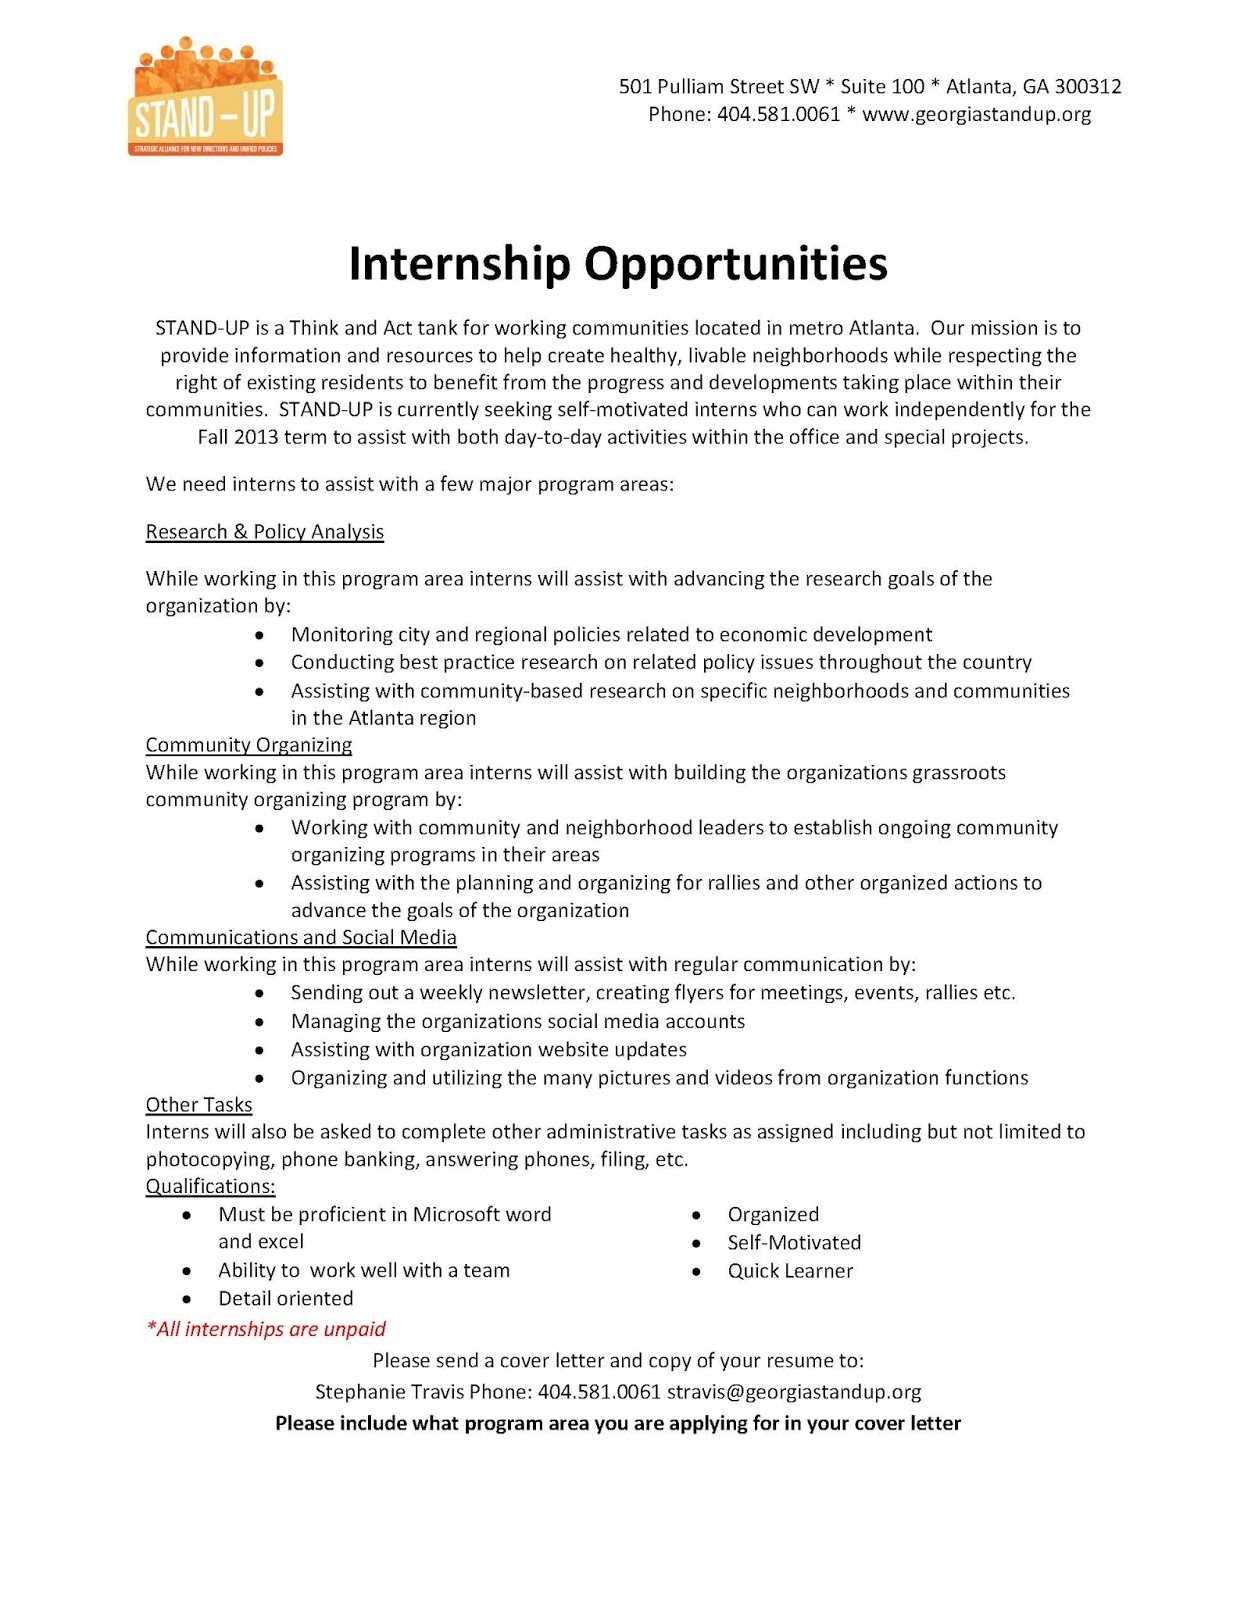 essay applying for internship cover fleet administrator